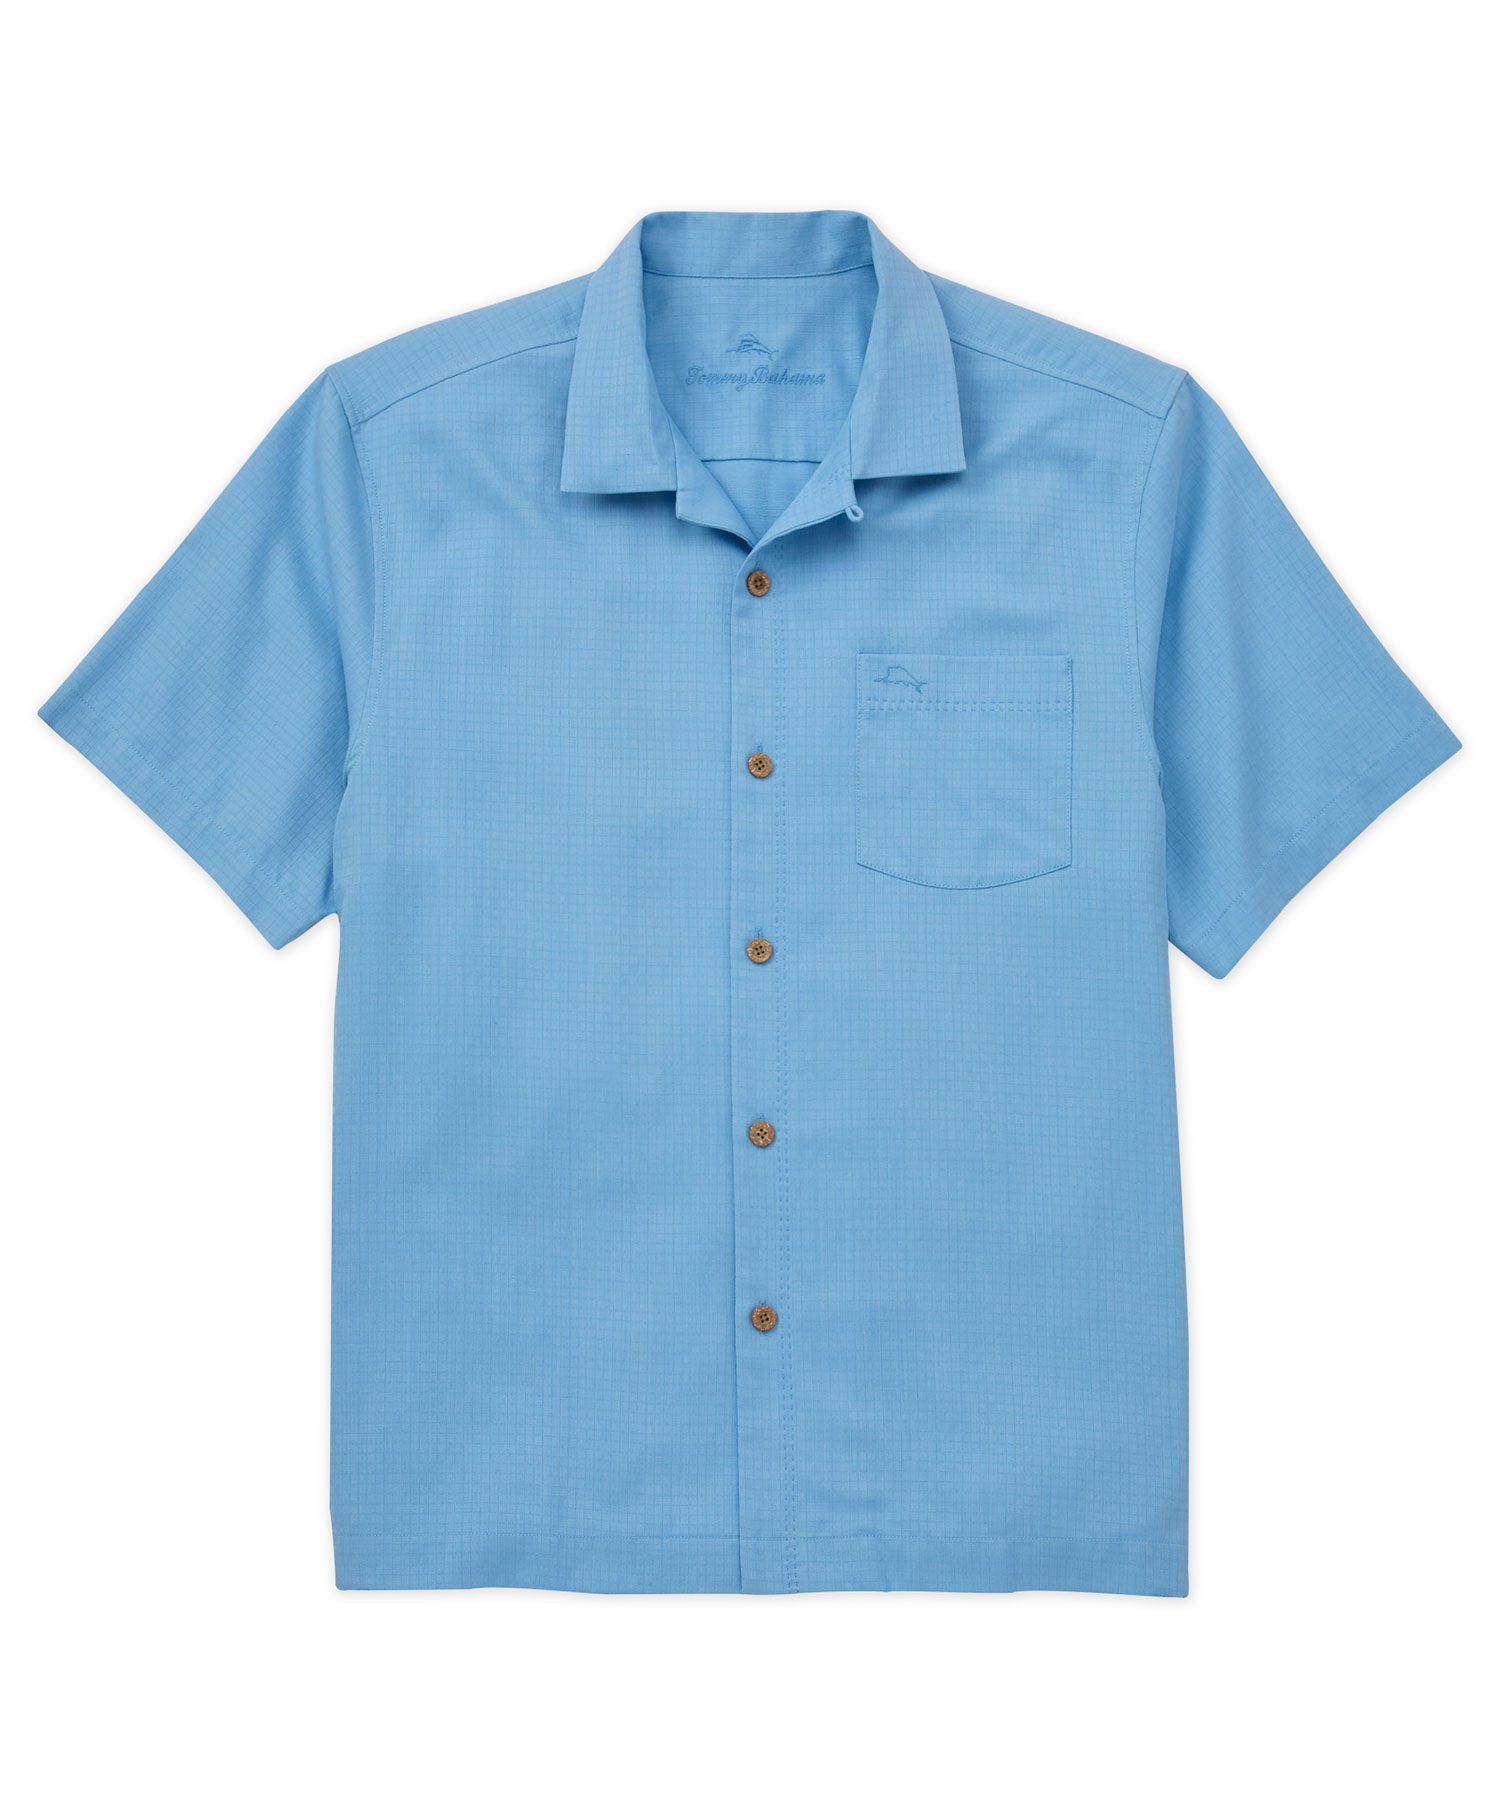 Tommy Bahama Short Sleeve Coastal Breeze Check Camp Shirt, Men's Big & Tall